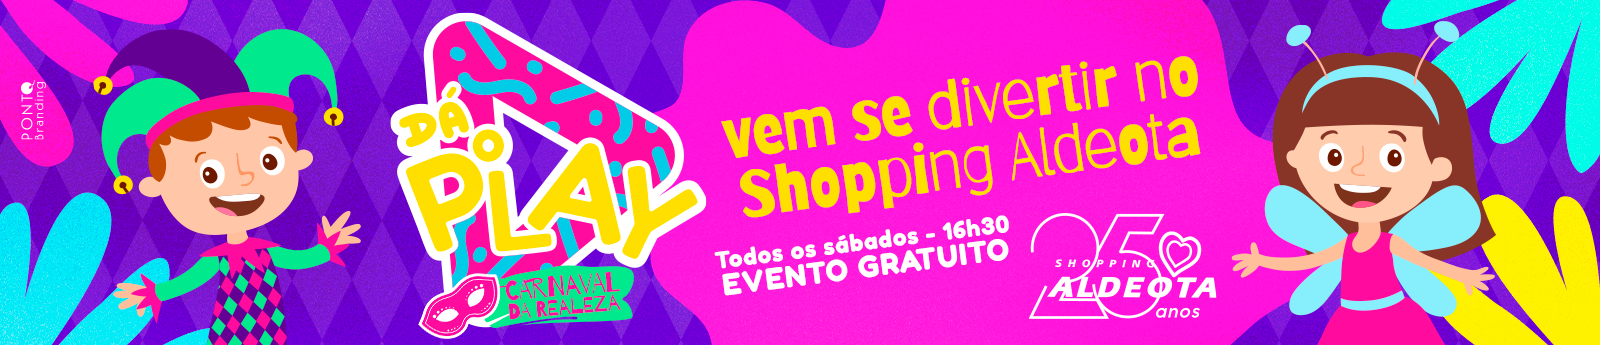 banner topo - Shopping Aldeota